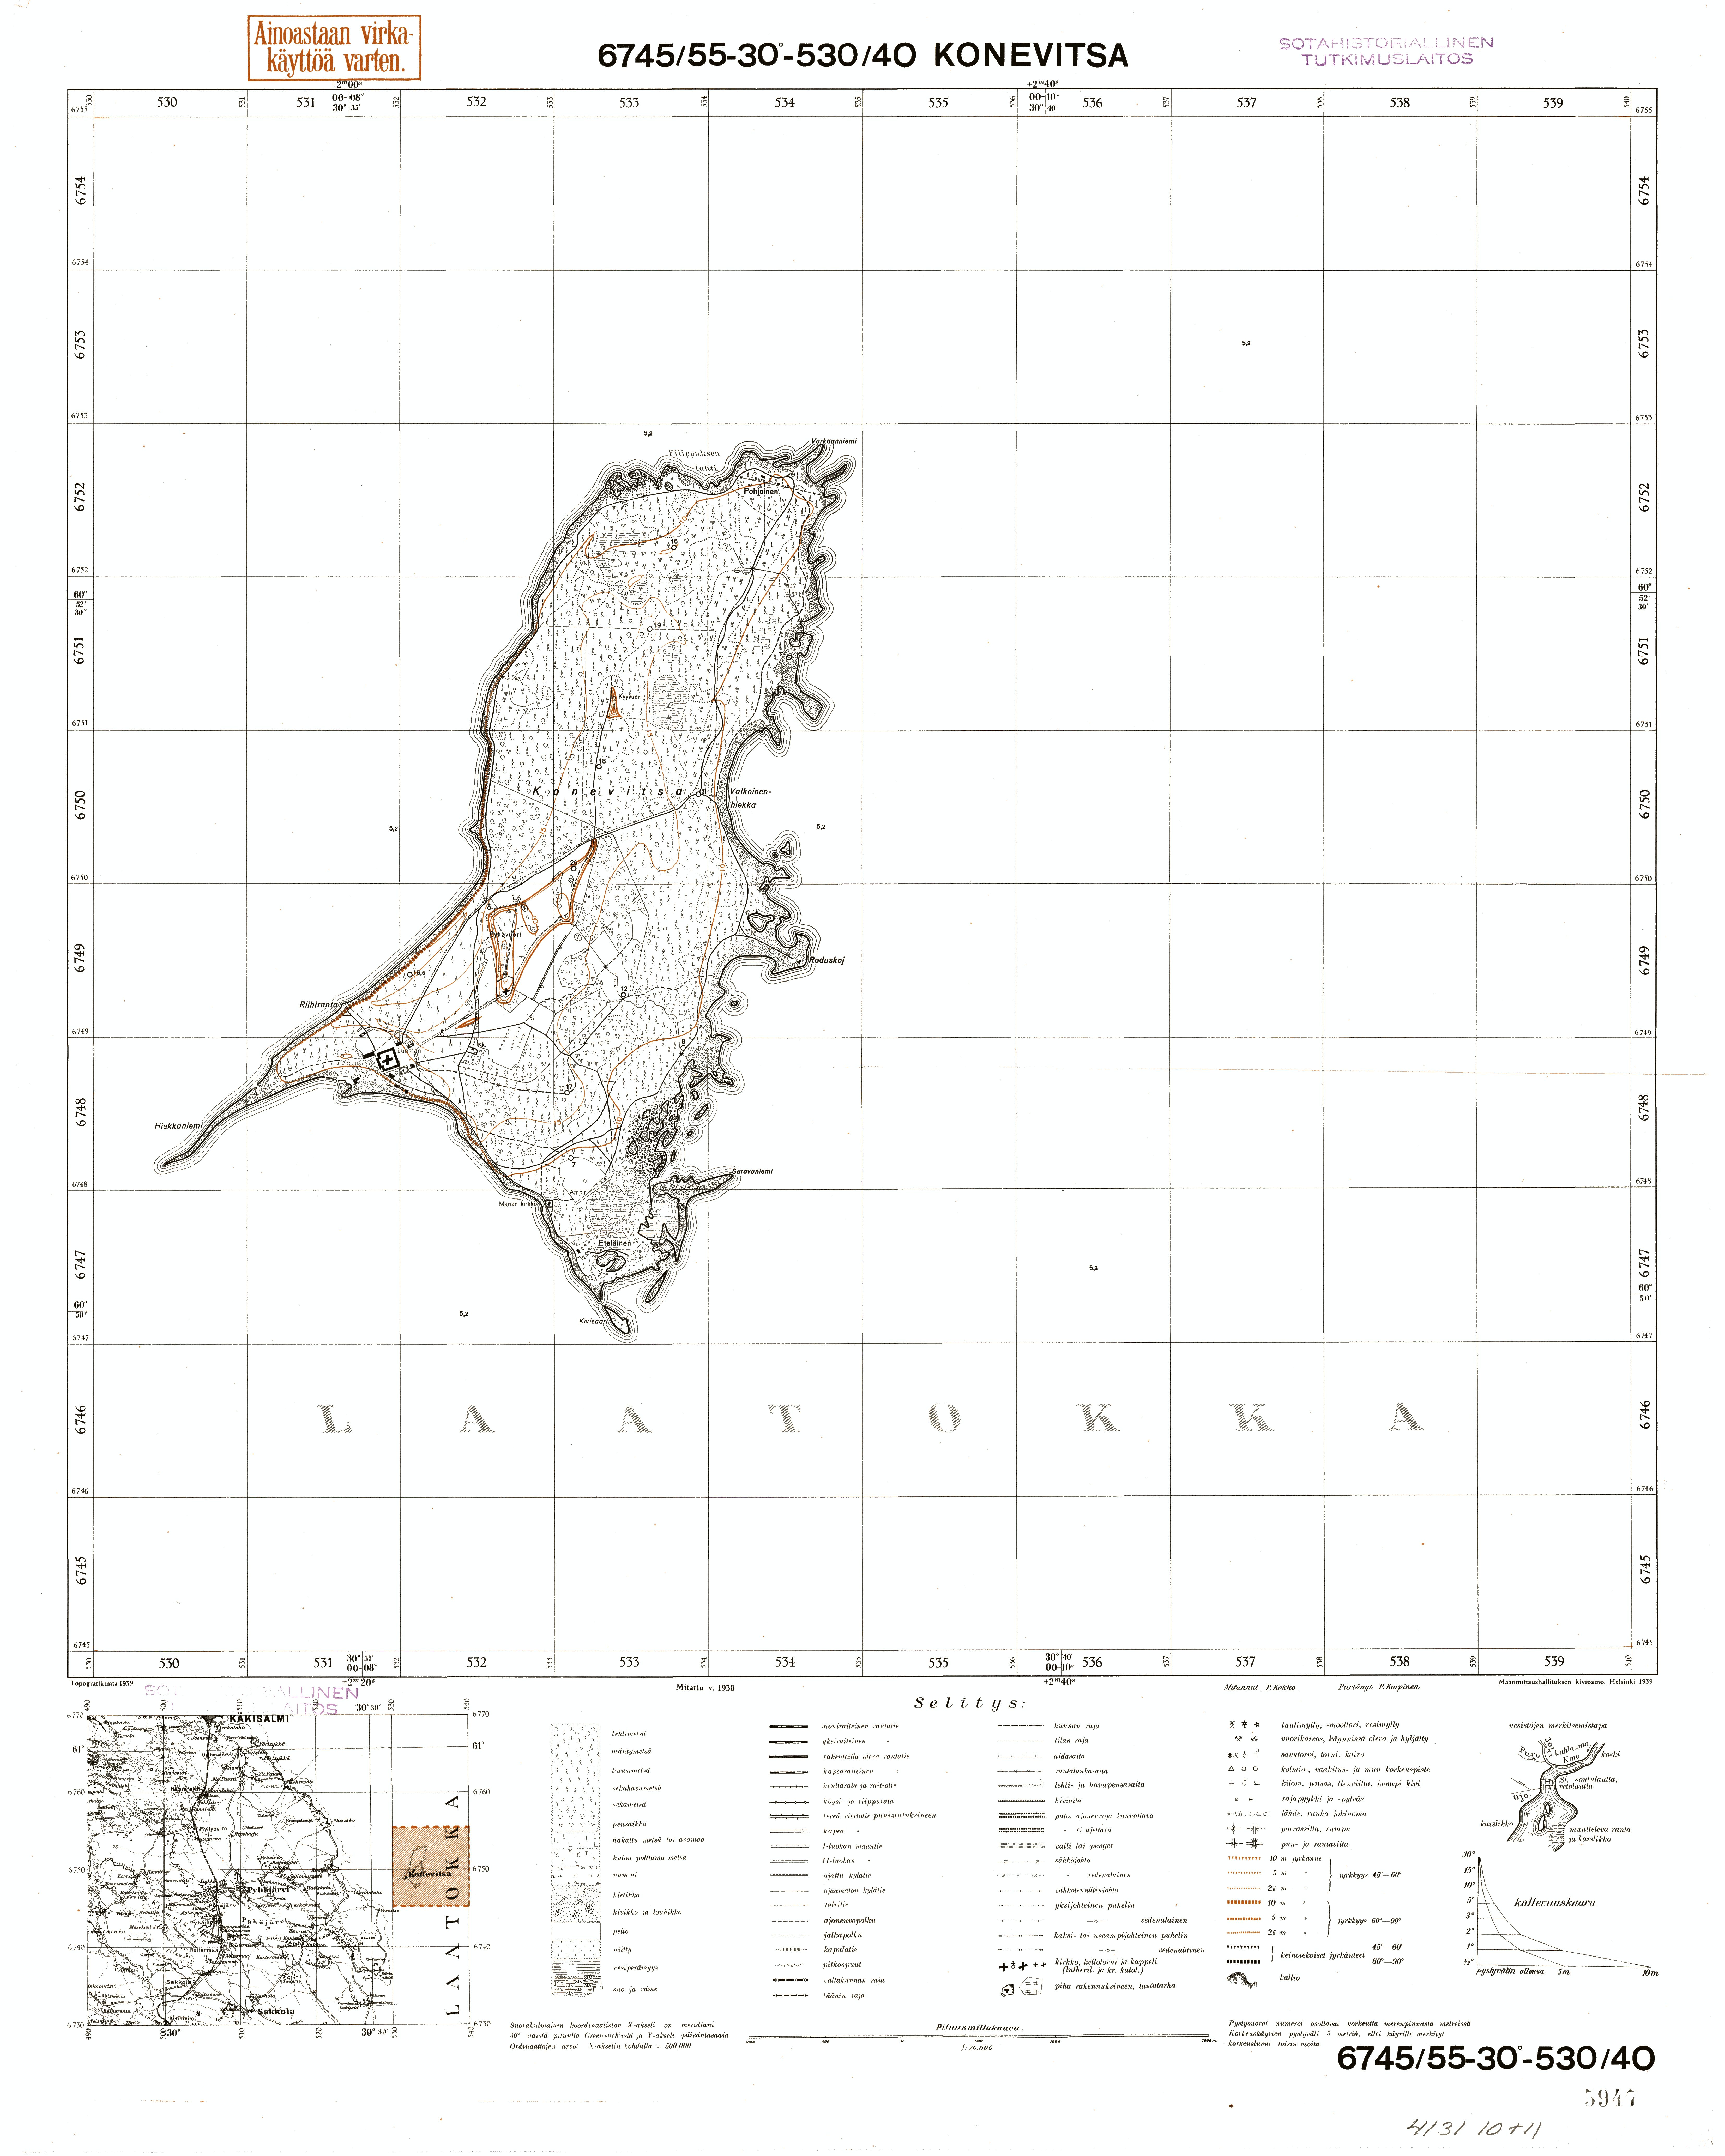 Konevets Island. Konevitsa. Topografikartta 413110, 413111. Topographic map from 1939